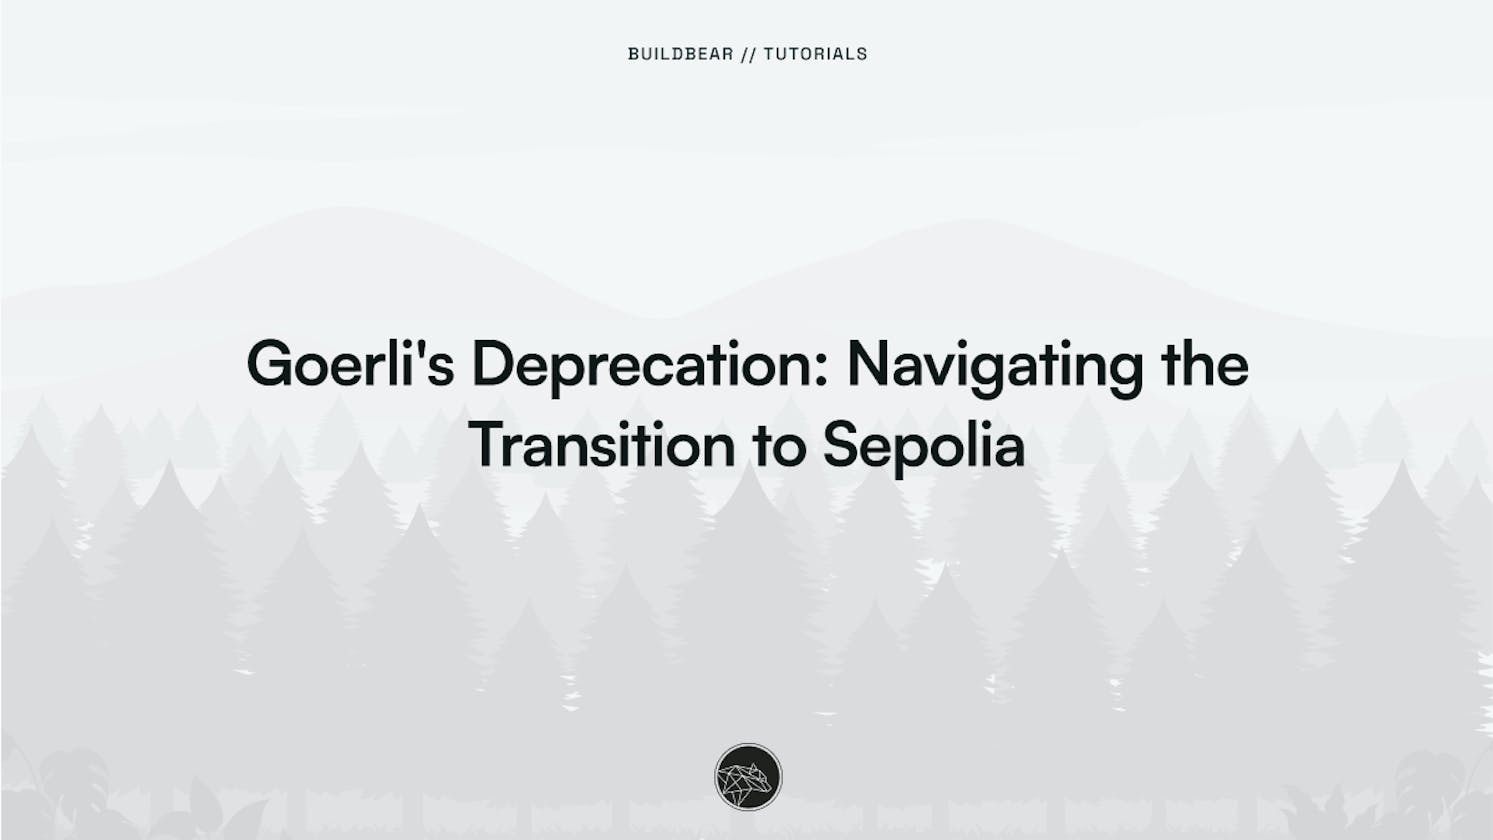 Goerli's Deprecation: Navigating the Transition to Sepolia.